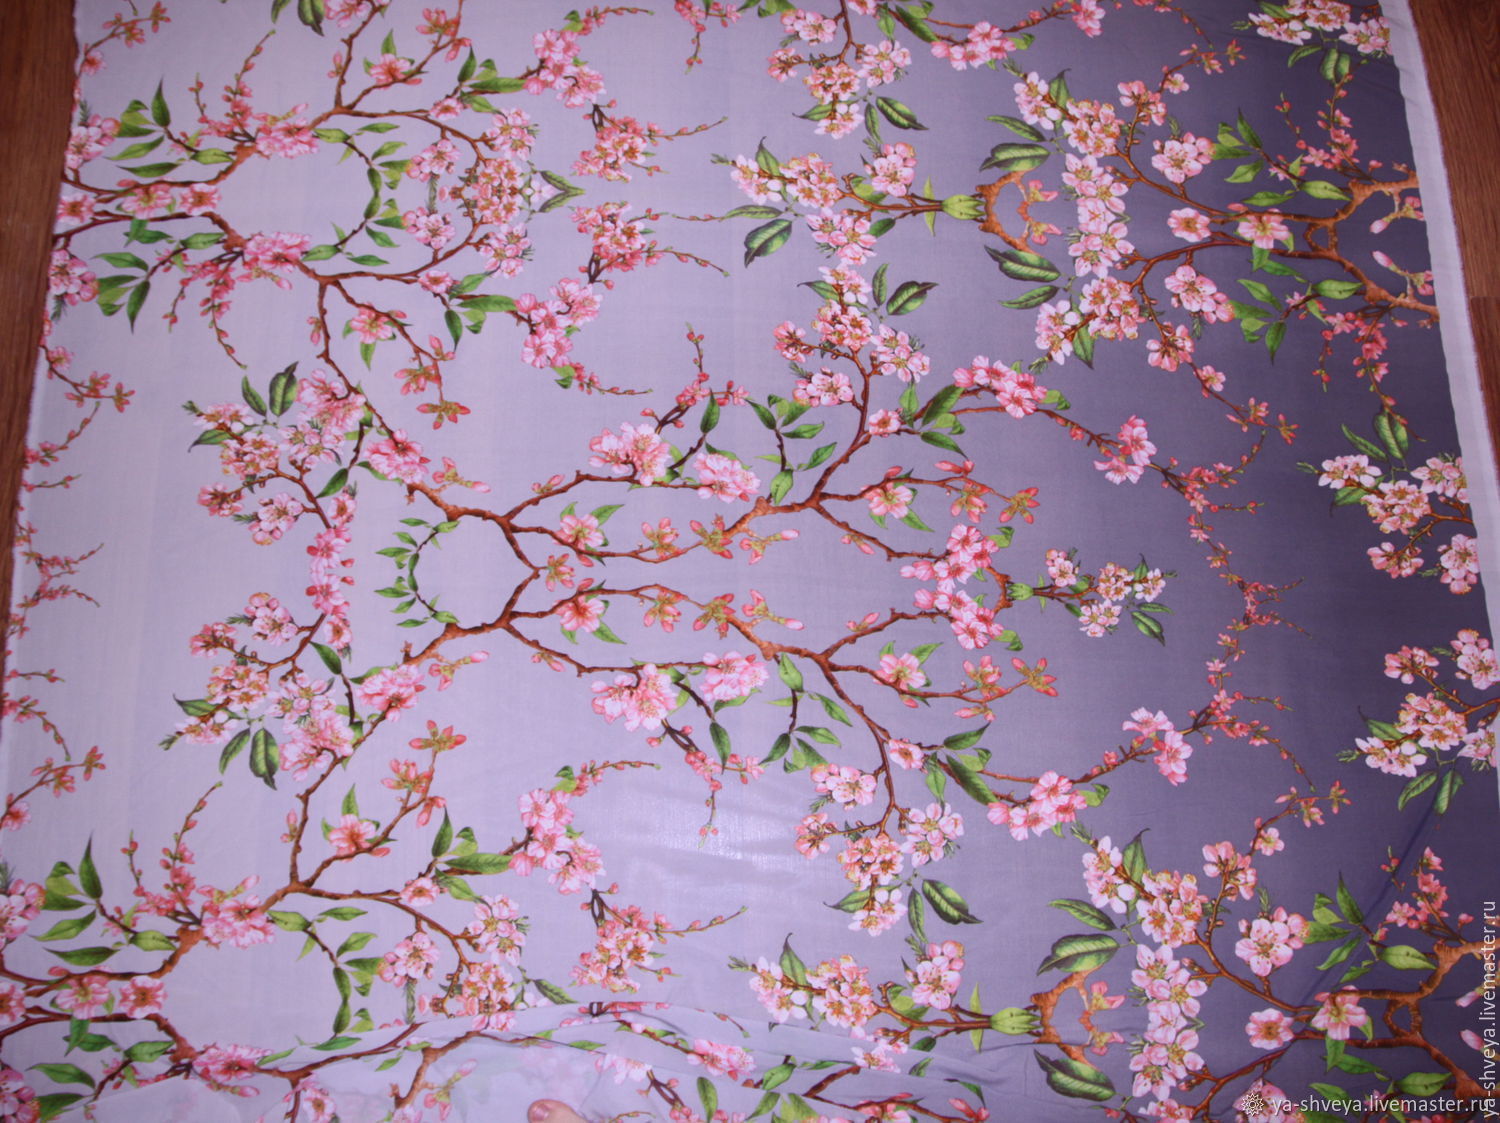 Ткань сакура. Ткань шифон Сакура. Ткань для платья Сакура. Ткань Сакура для мебели. Sakura мебельная ткань.